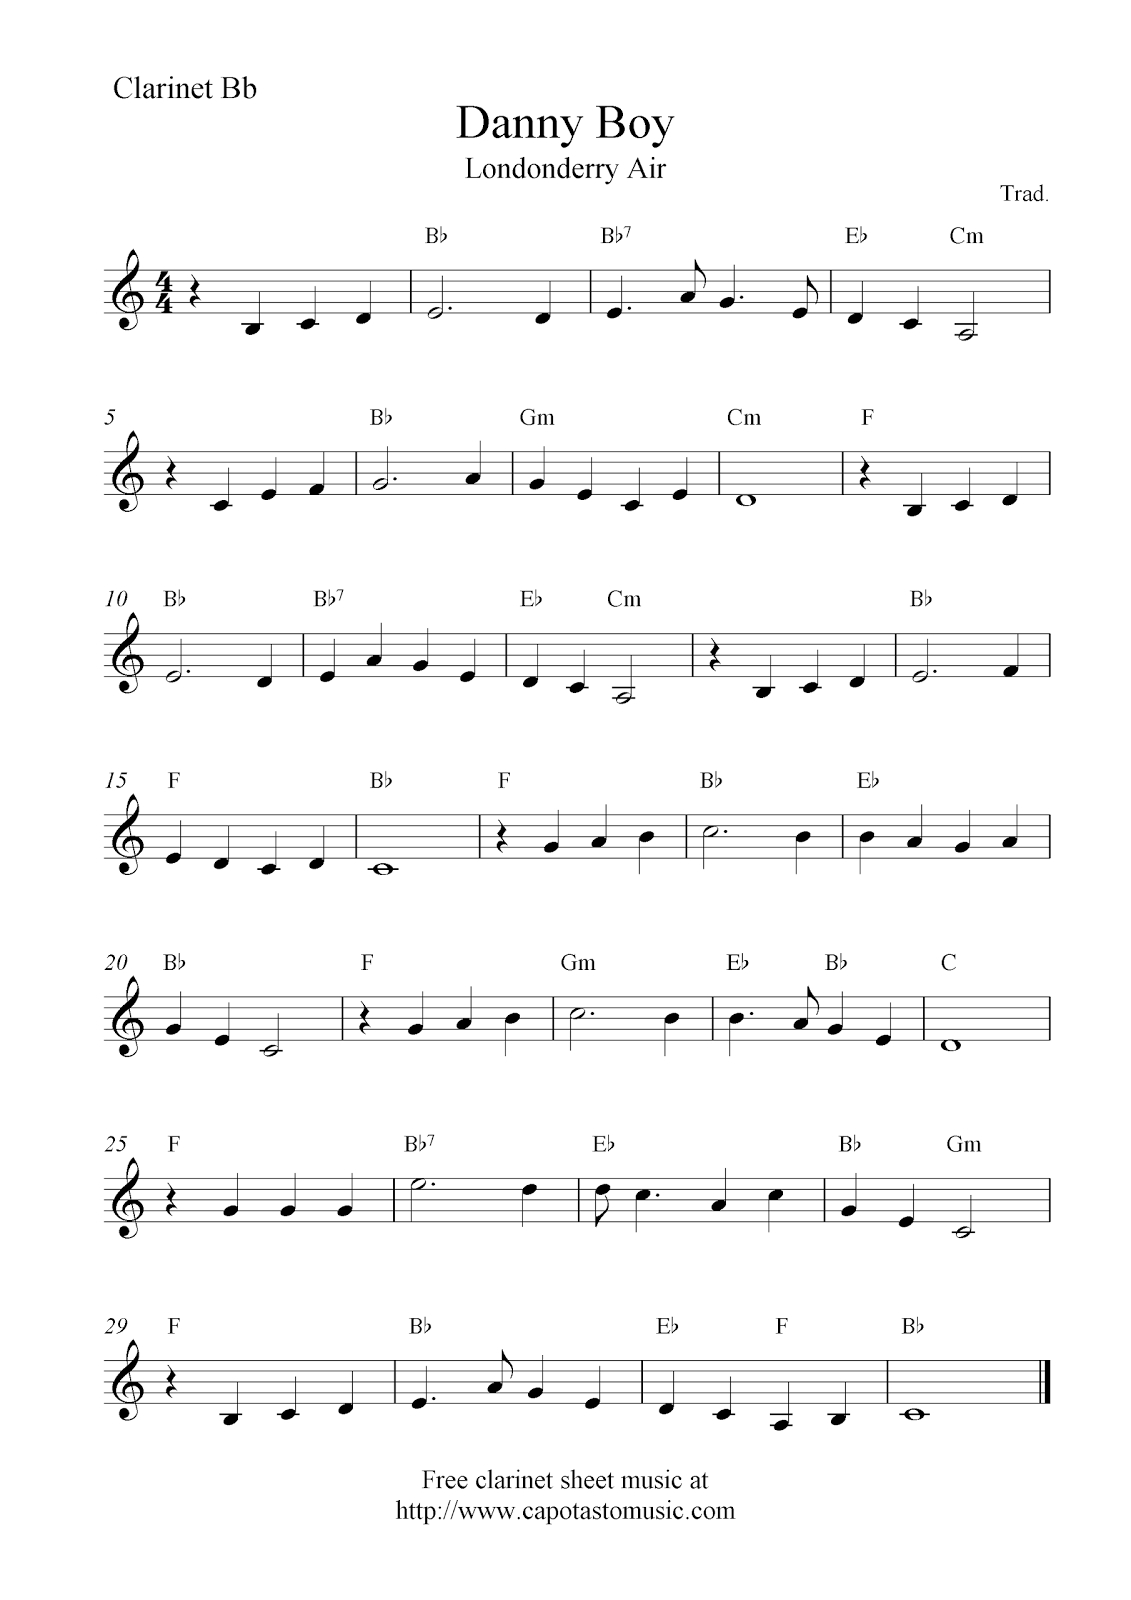 Danny Boy (Londonderry Air), Free Clarinet Sheet Music Notes - Free Printable Clarinet Music